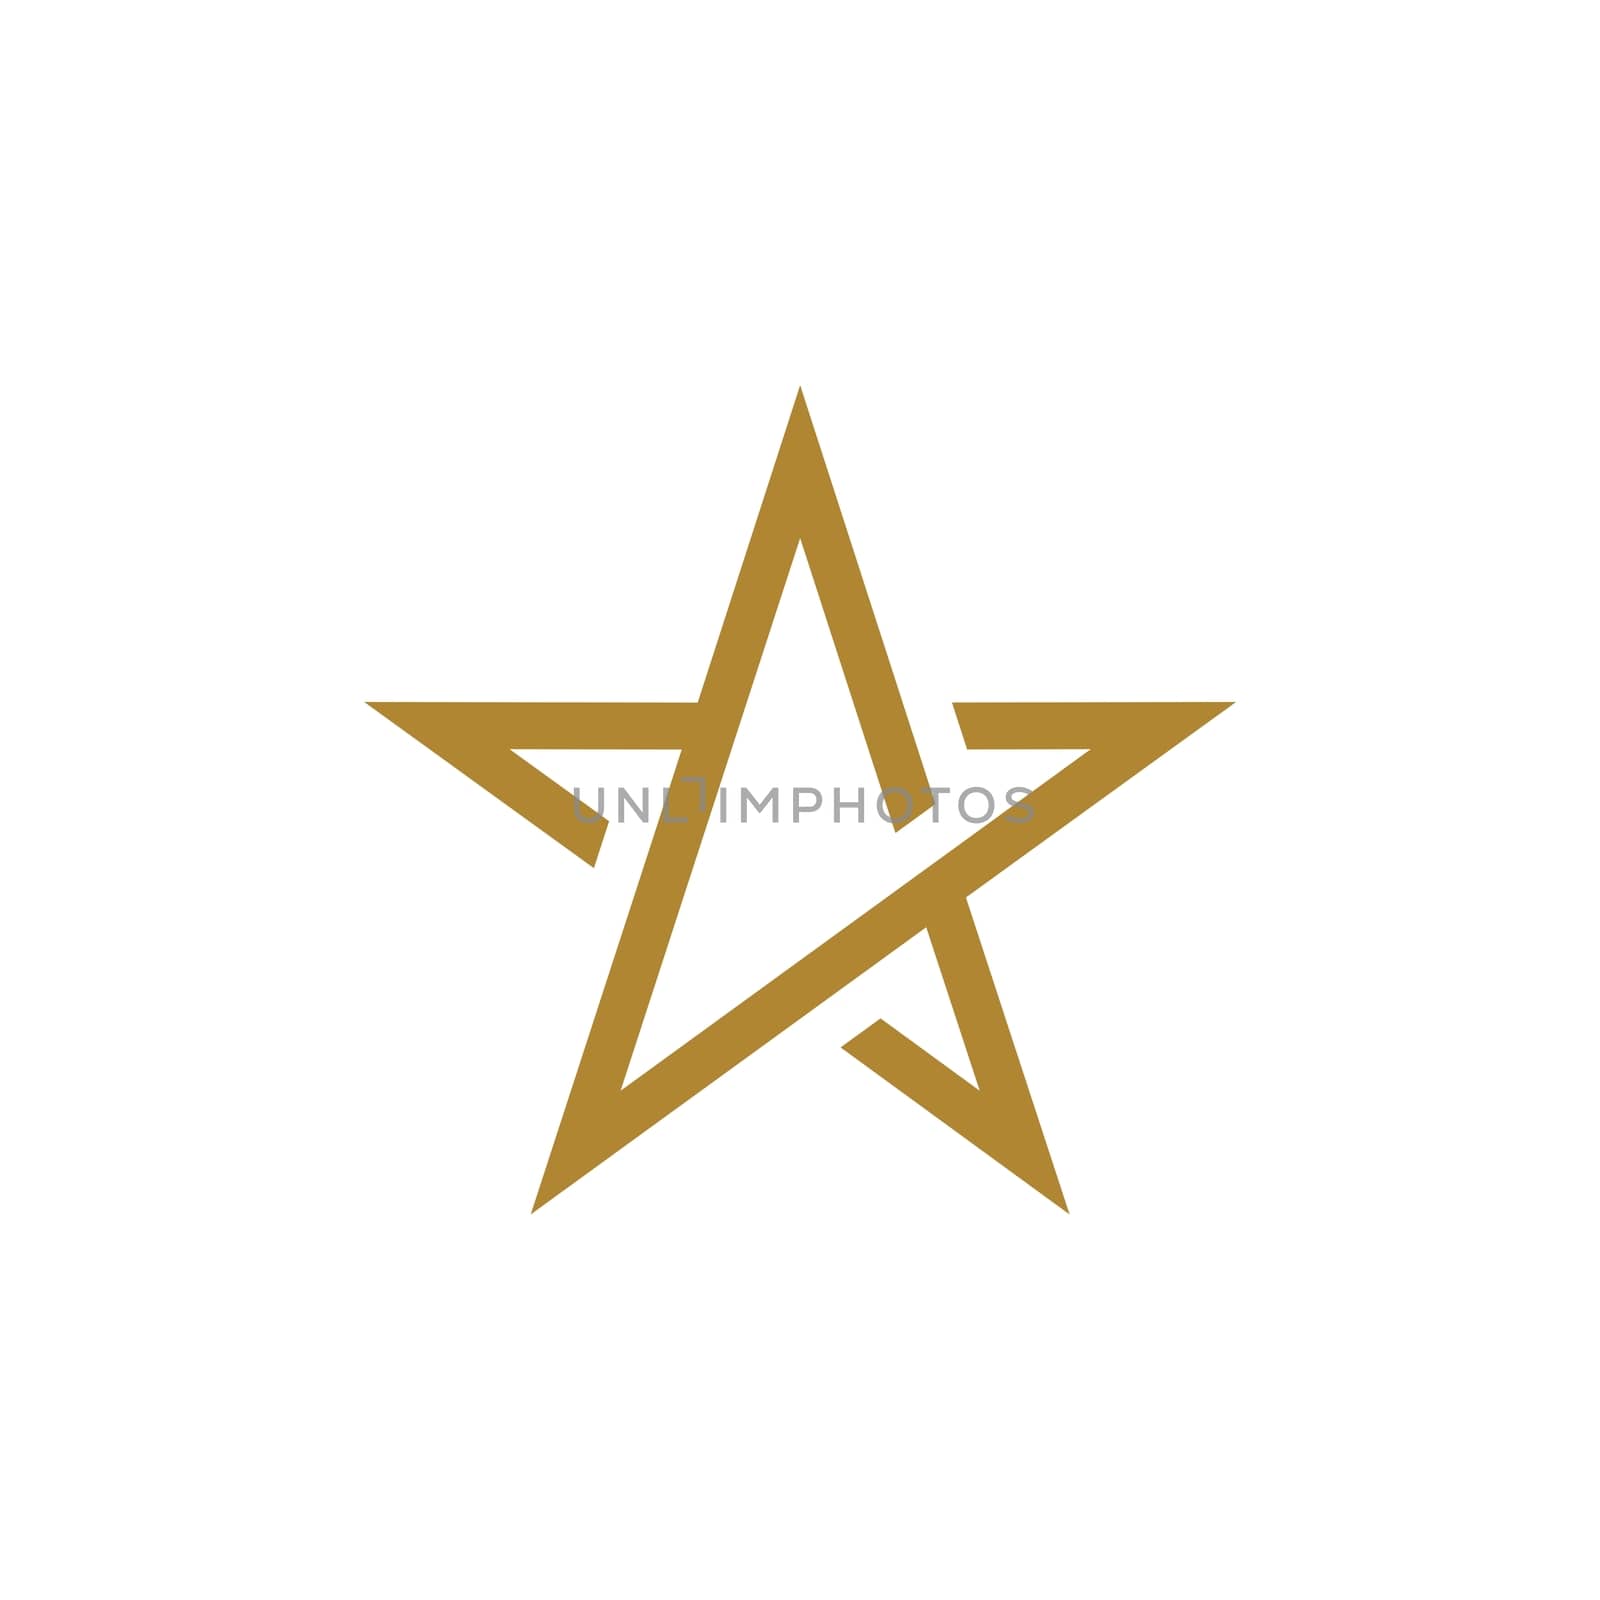 Gold Star Line Logo Template Illustration Design. Vector EPS 10. by soponyono